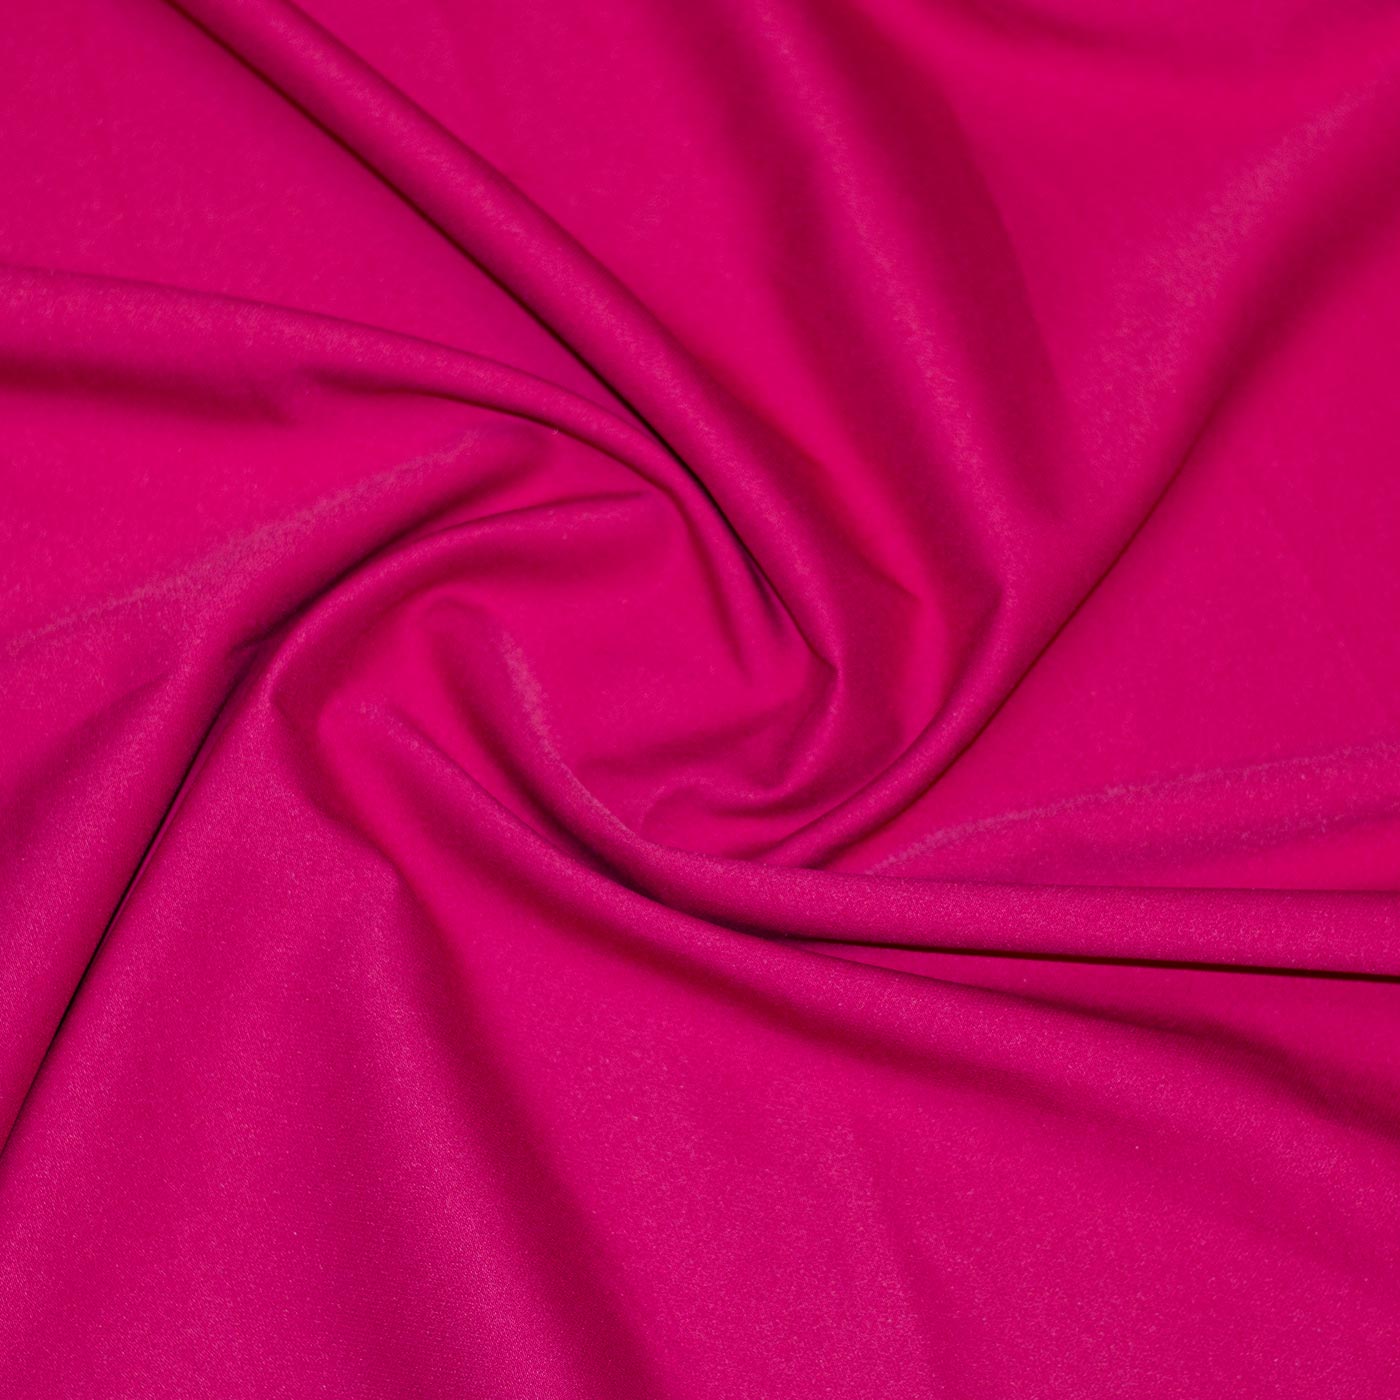 High Quality Pink Petalo Di Rosa Crepe Fabric